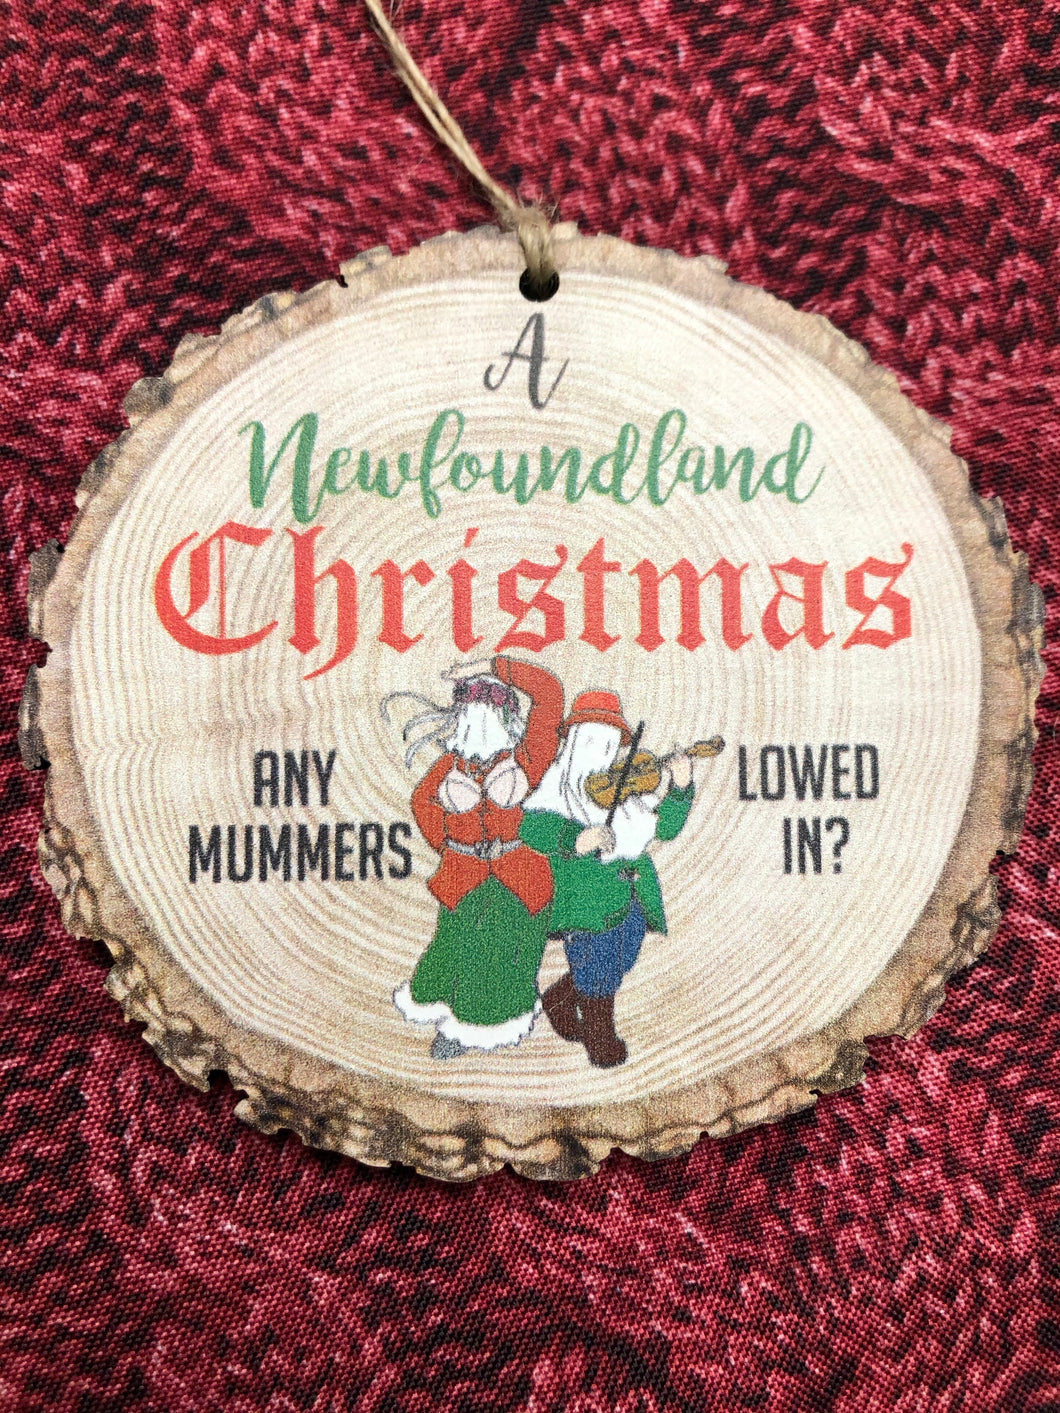 Newfoundland Christmas Mummers ornament